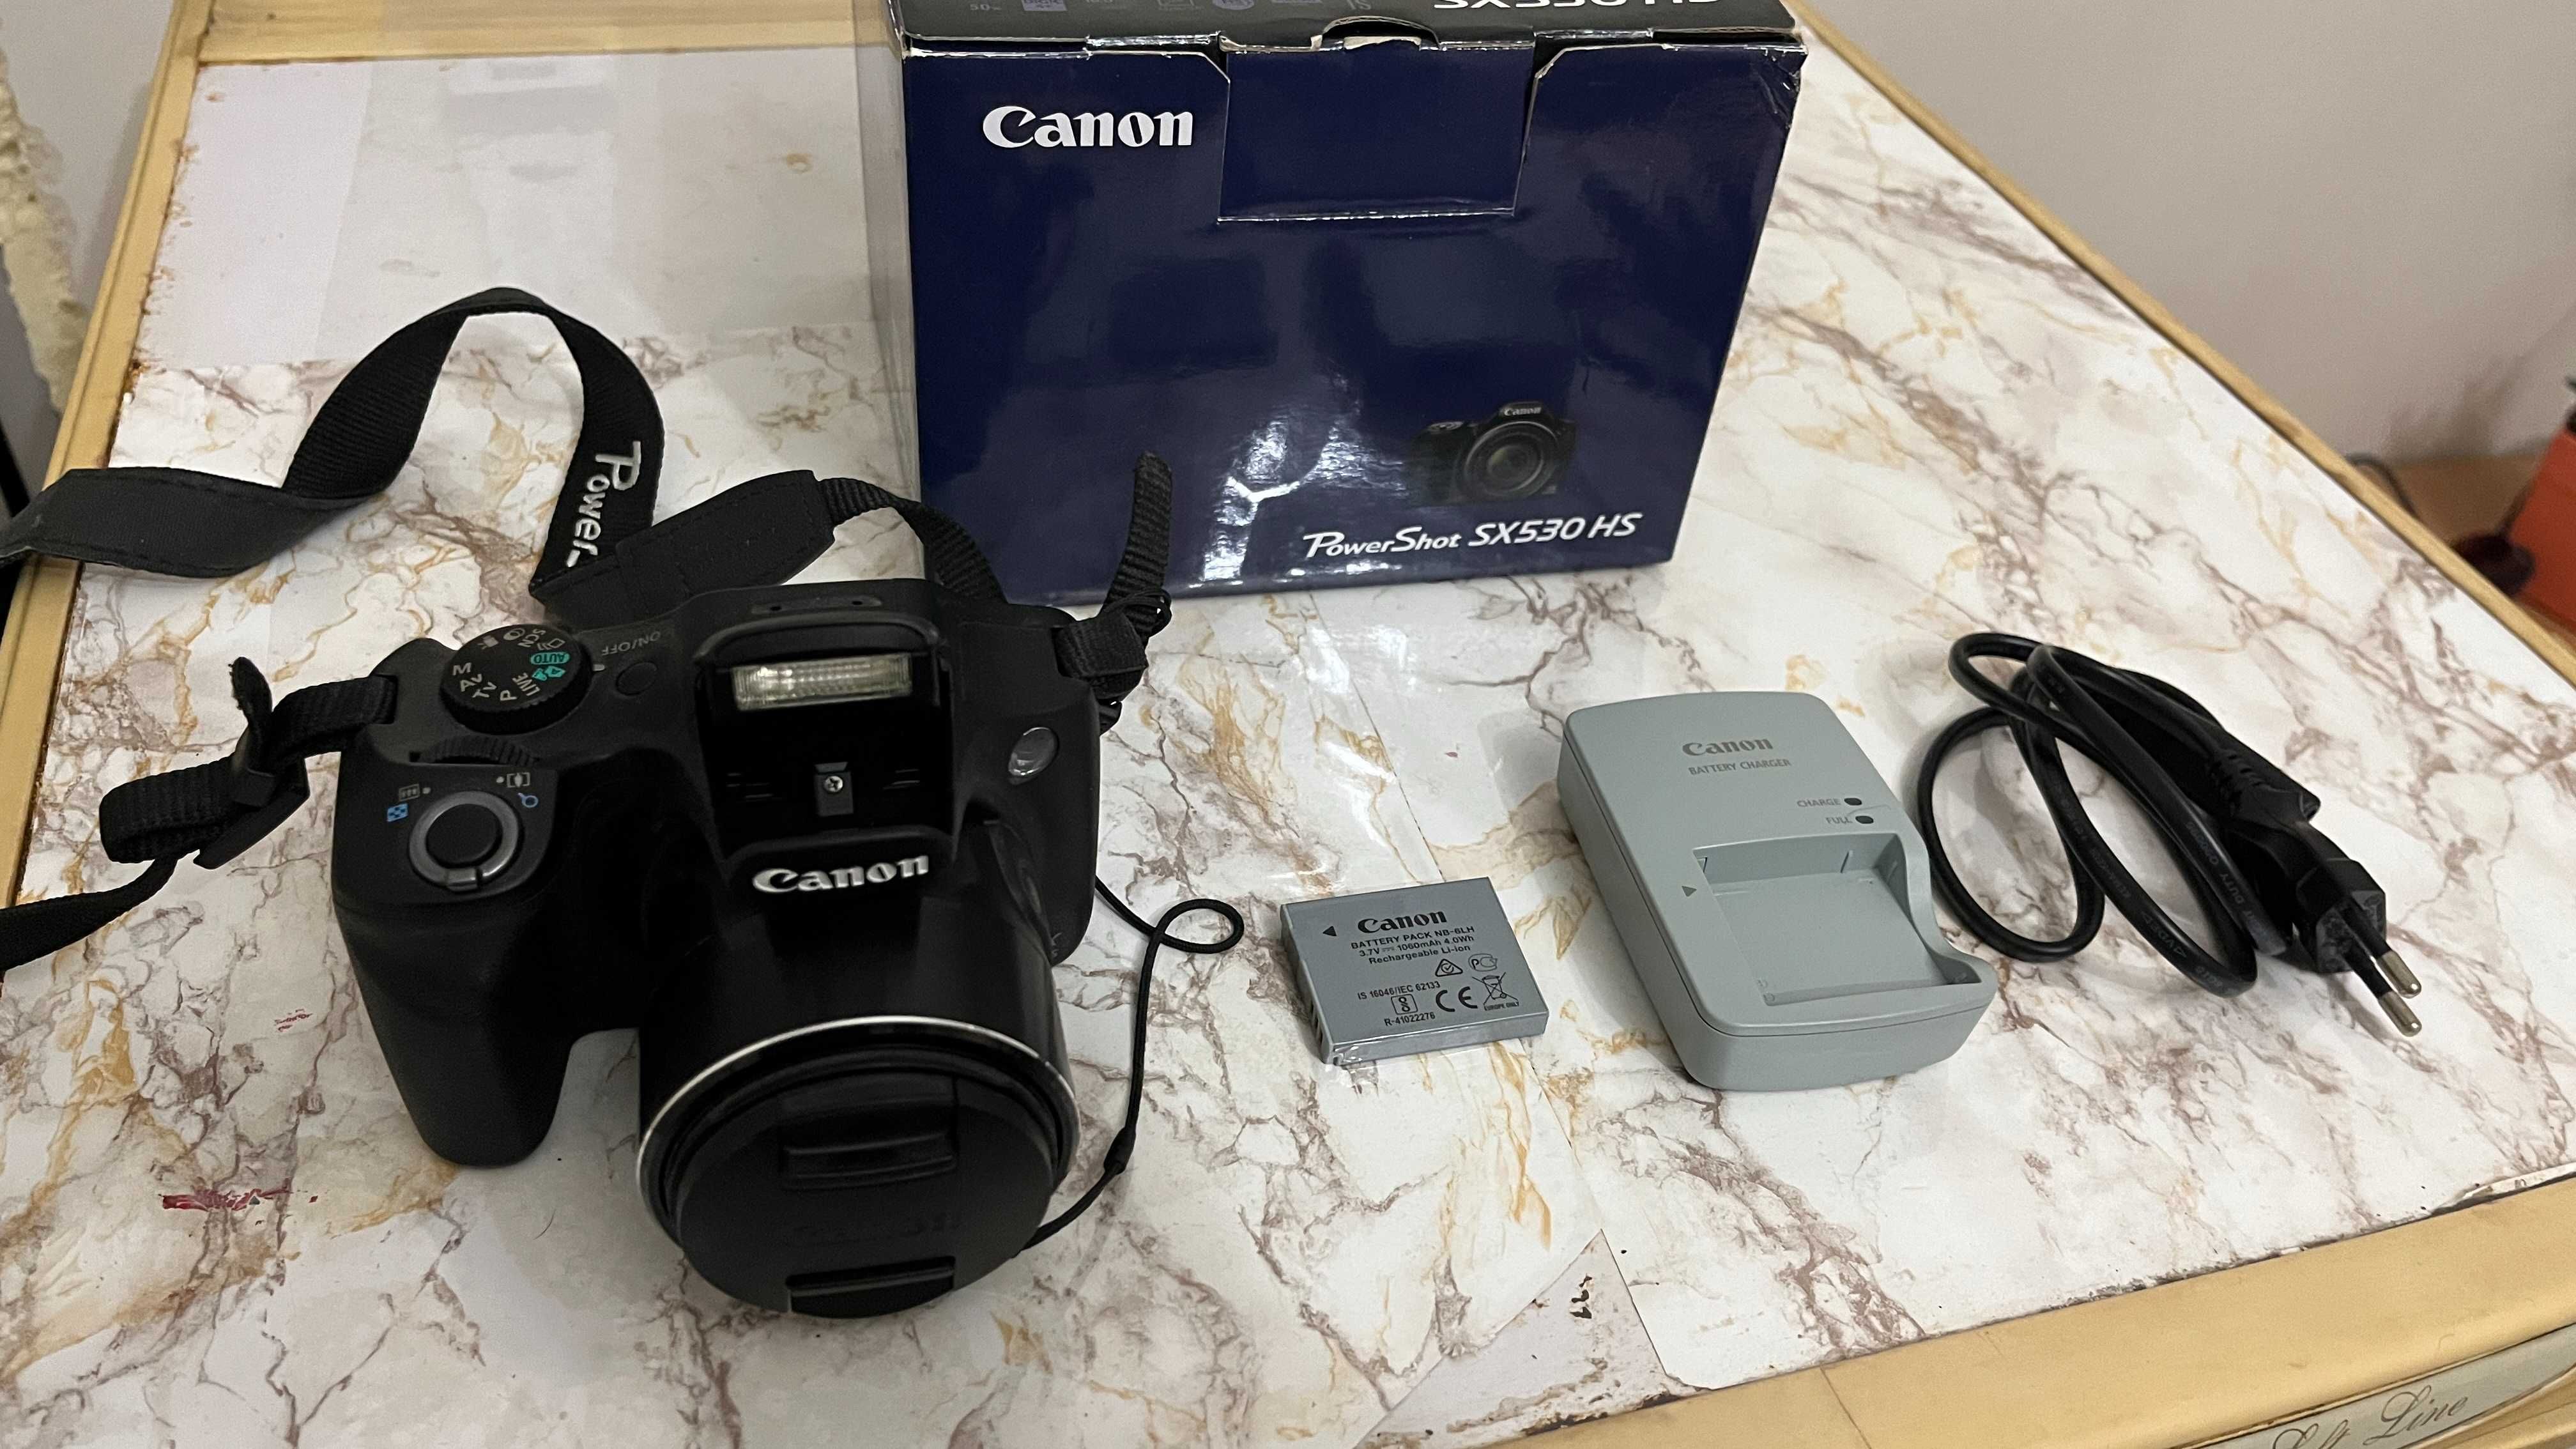 Фото/Відео камера Canon PowerShot SX530 HS Wi-Fi